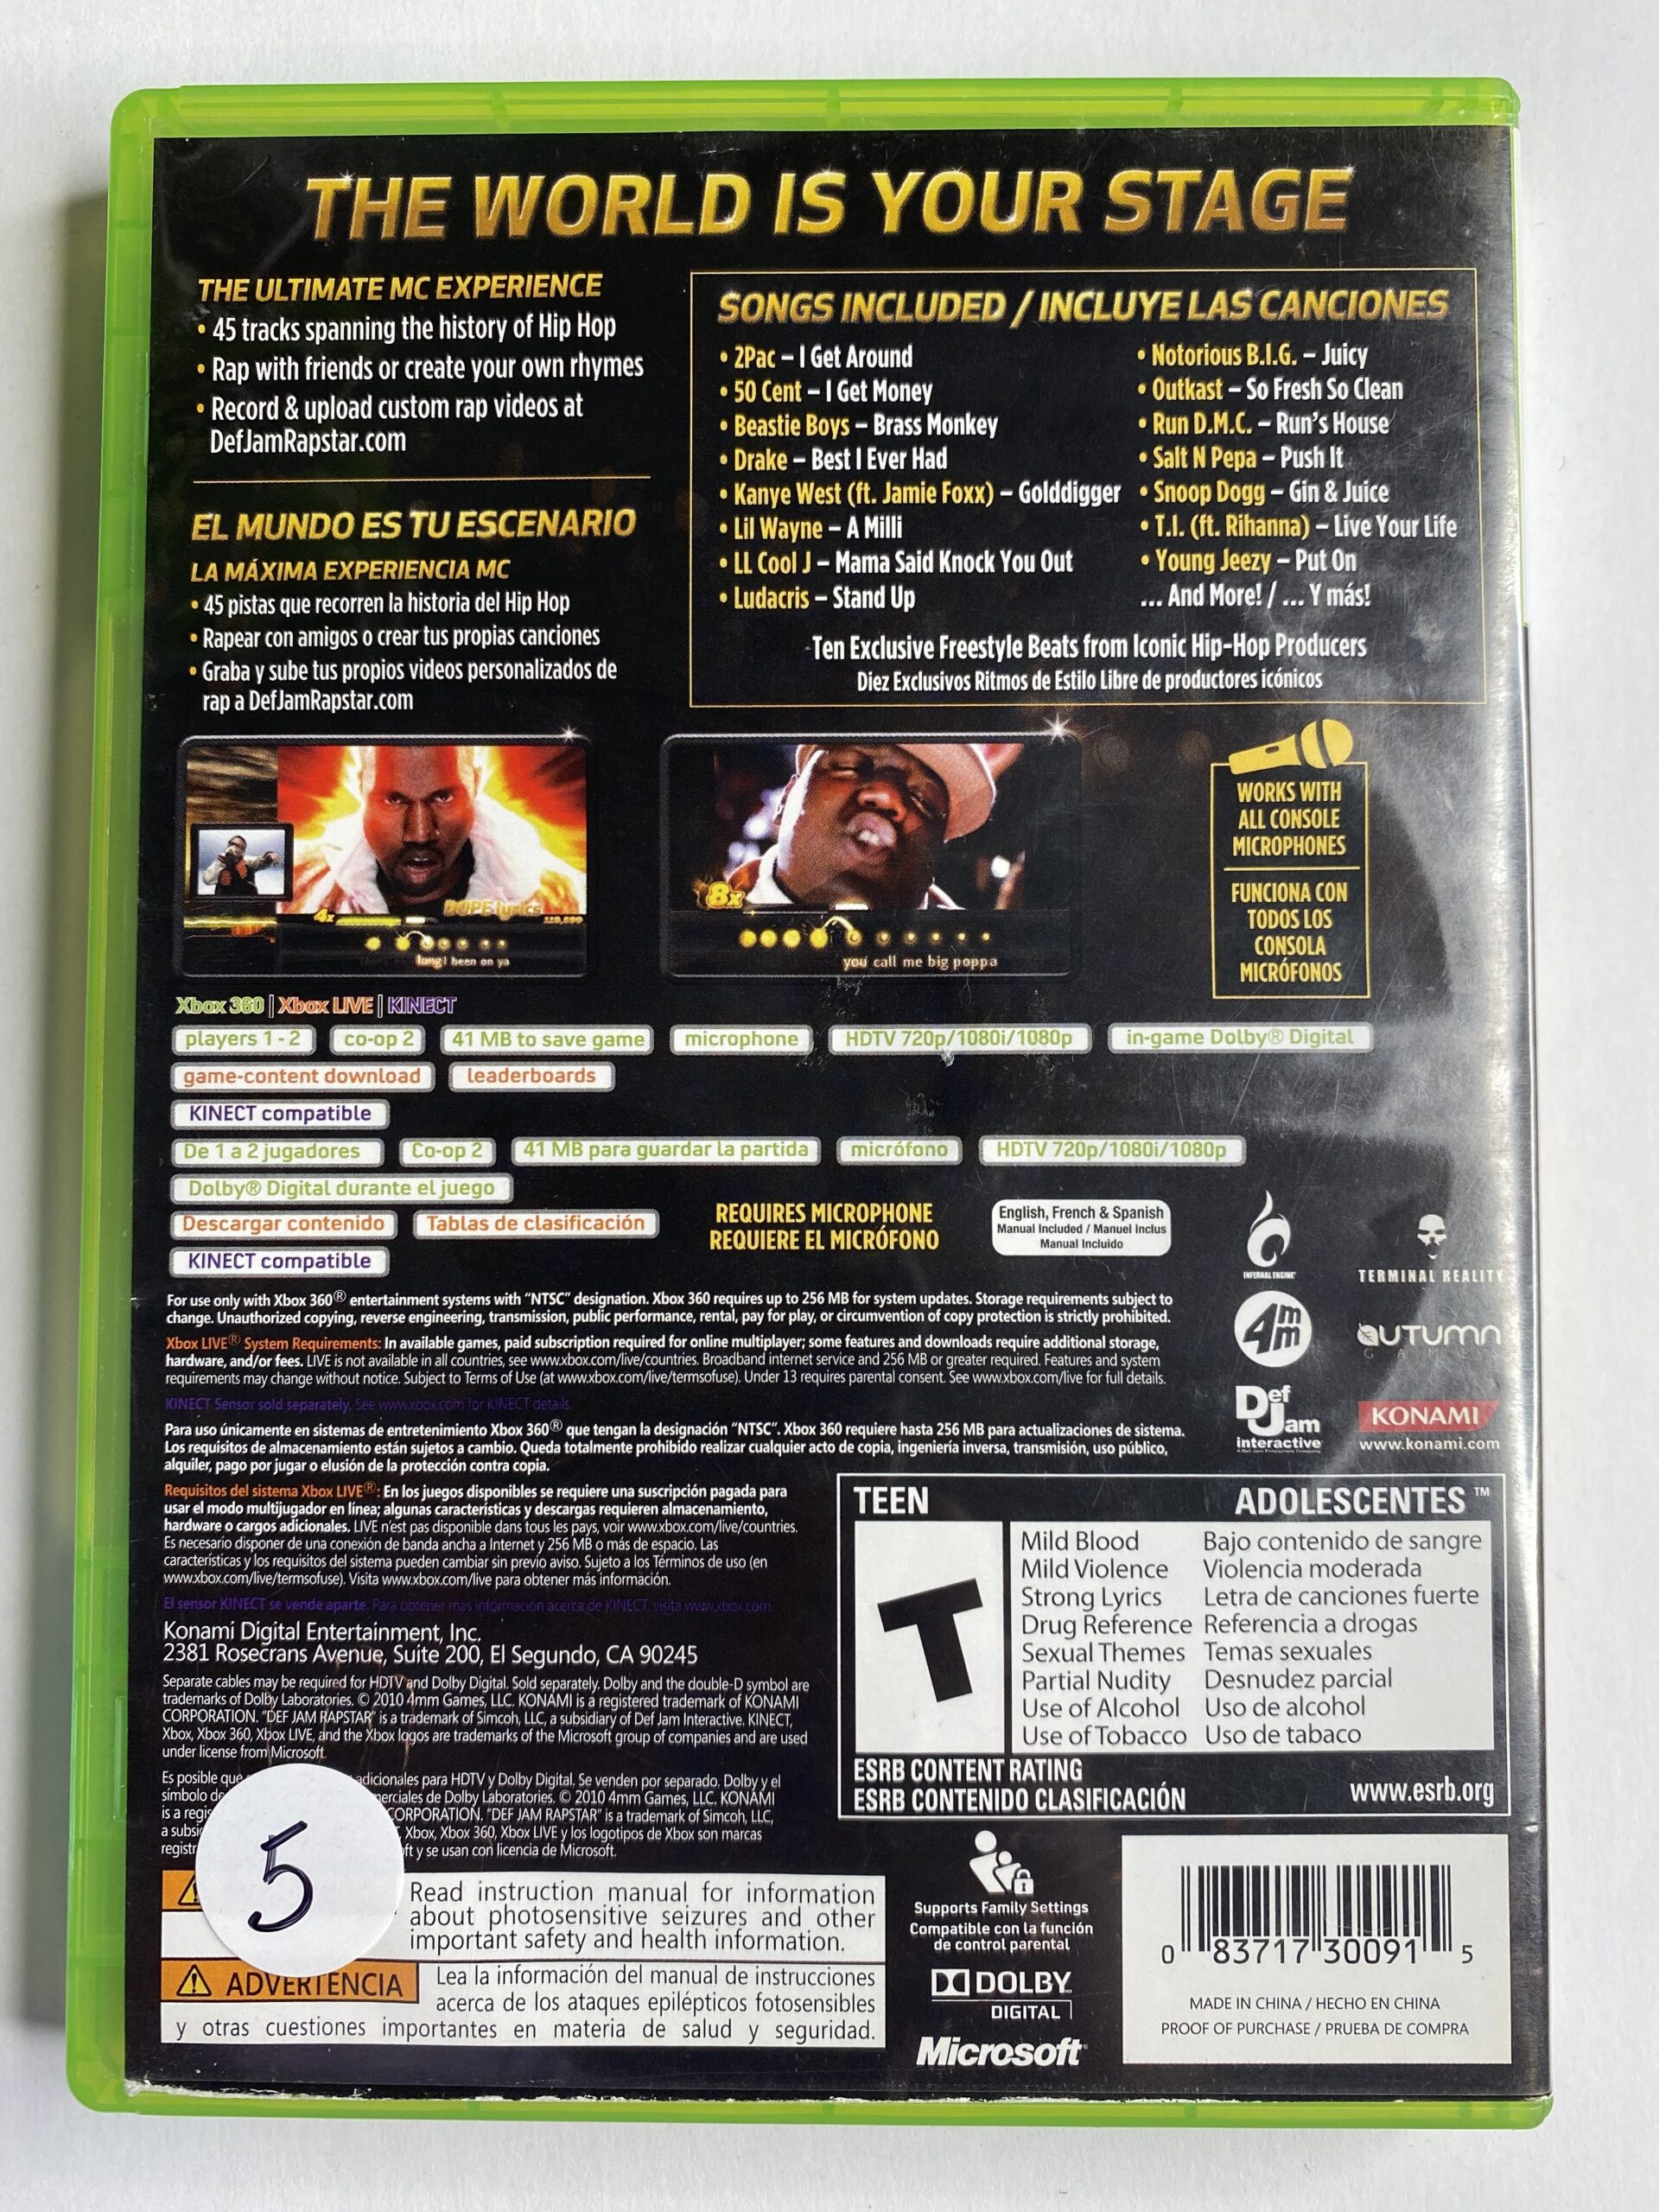 XBOX 360 DEF JAM RAPSTAR - Video Games